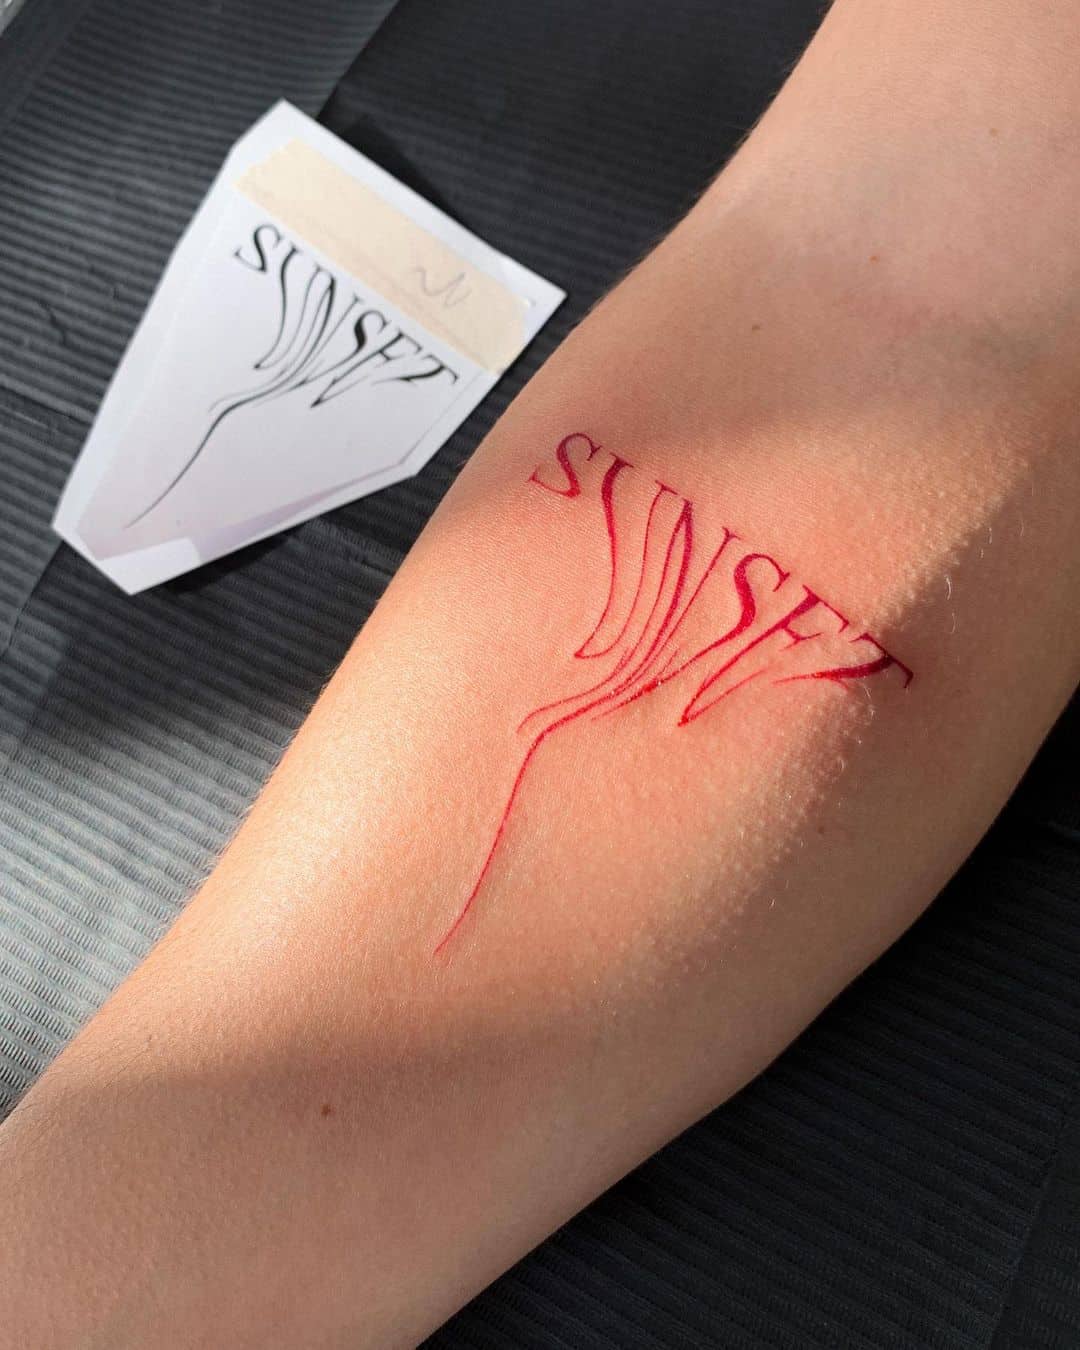 Jovay McGough - More red ink tattoos from long ago! @blacklodgeogden  #redinktattoo #red #redink #eternalsunshine #eternalink #redbutterfly #inked  #inkedgirl #art #tattoos #inkwork #otown #handmadewithlove #girlswhotattoo  #ogden #utah #ogdentattooartist ...